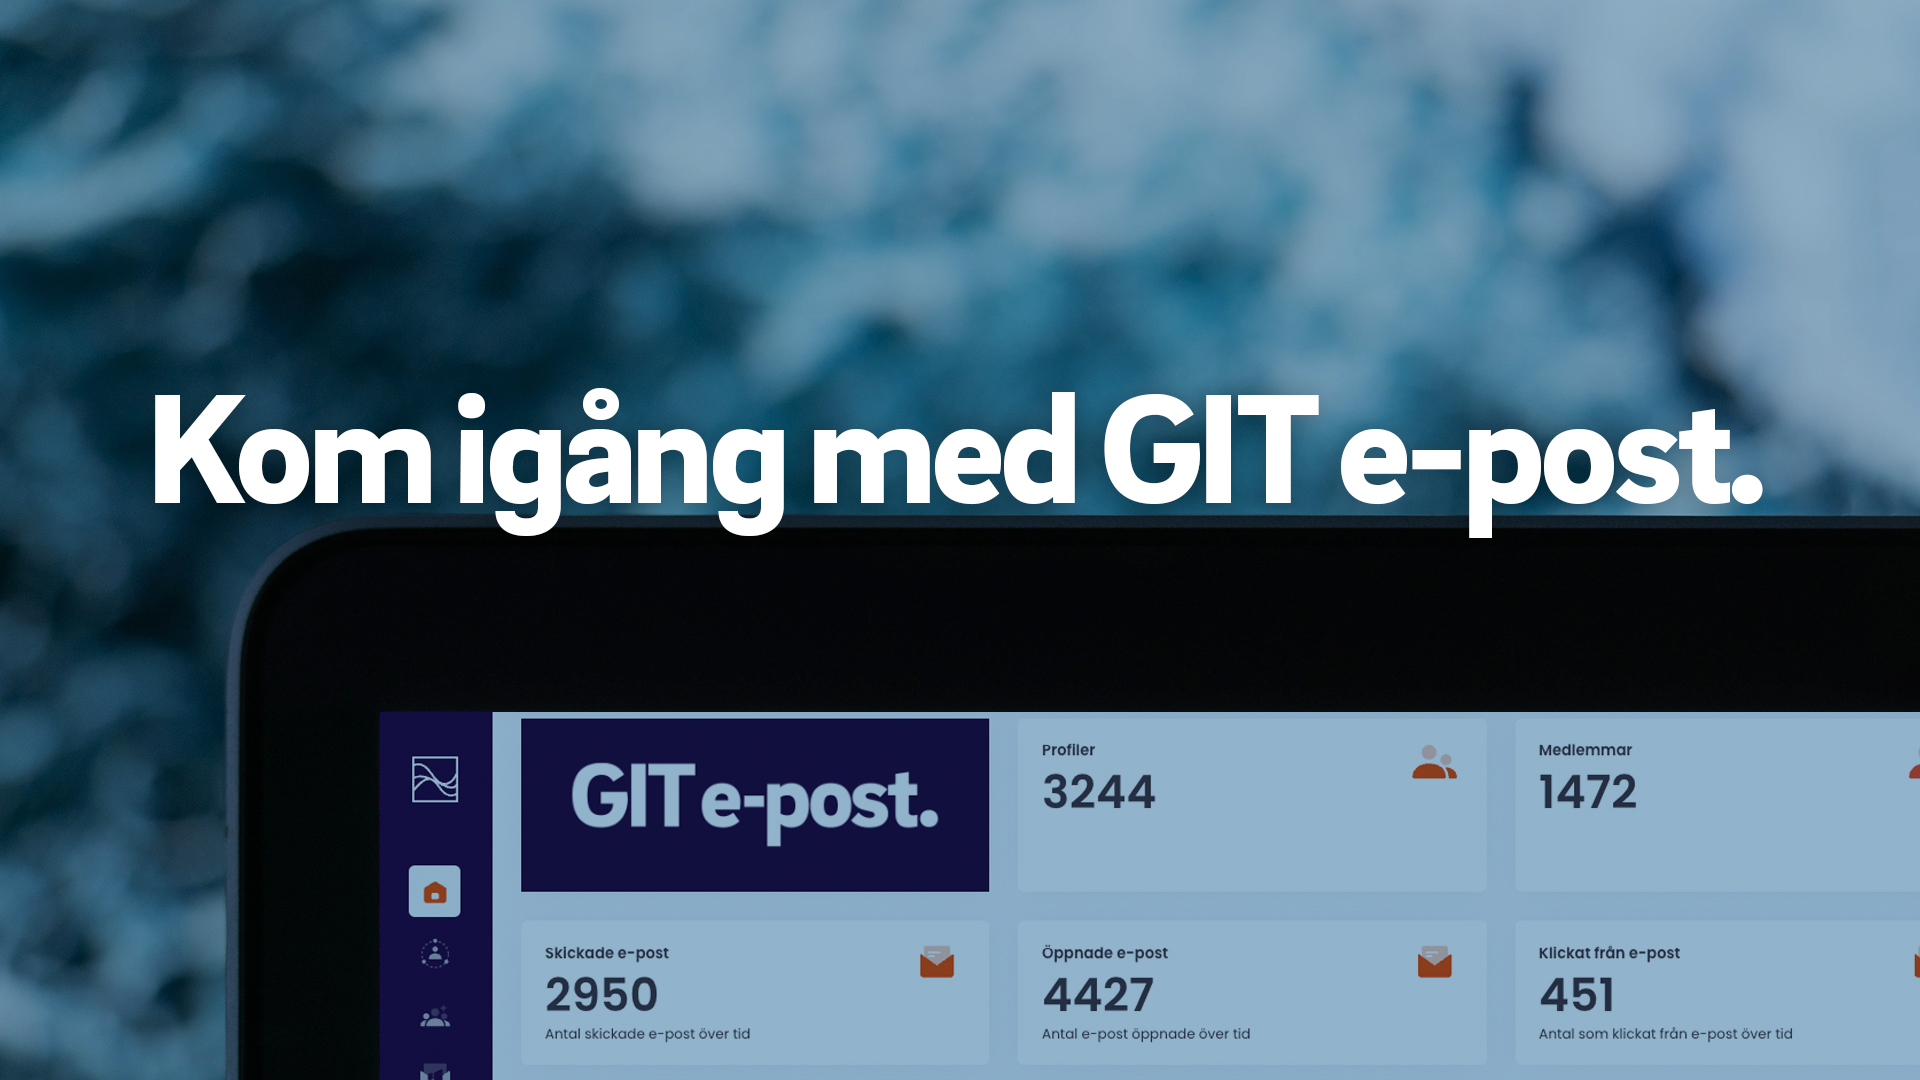 Kom igång med GIT e-post